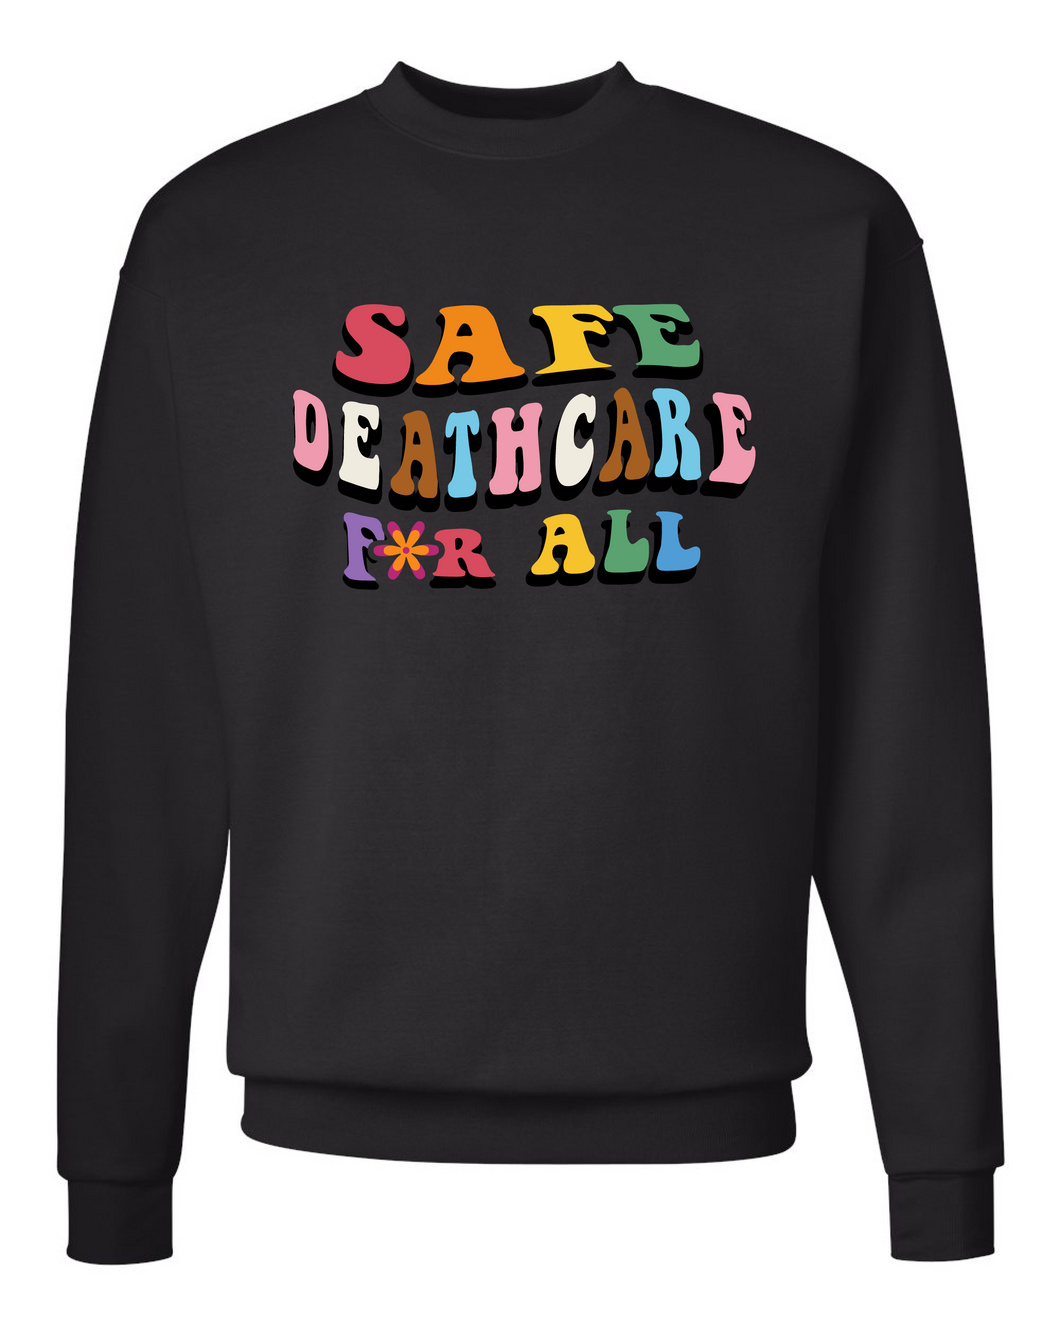 Safe Deathcare for All Crewneck Sweatshirt